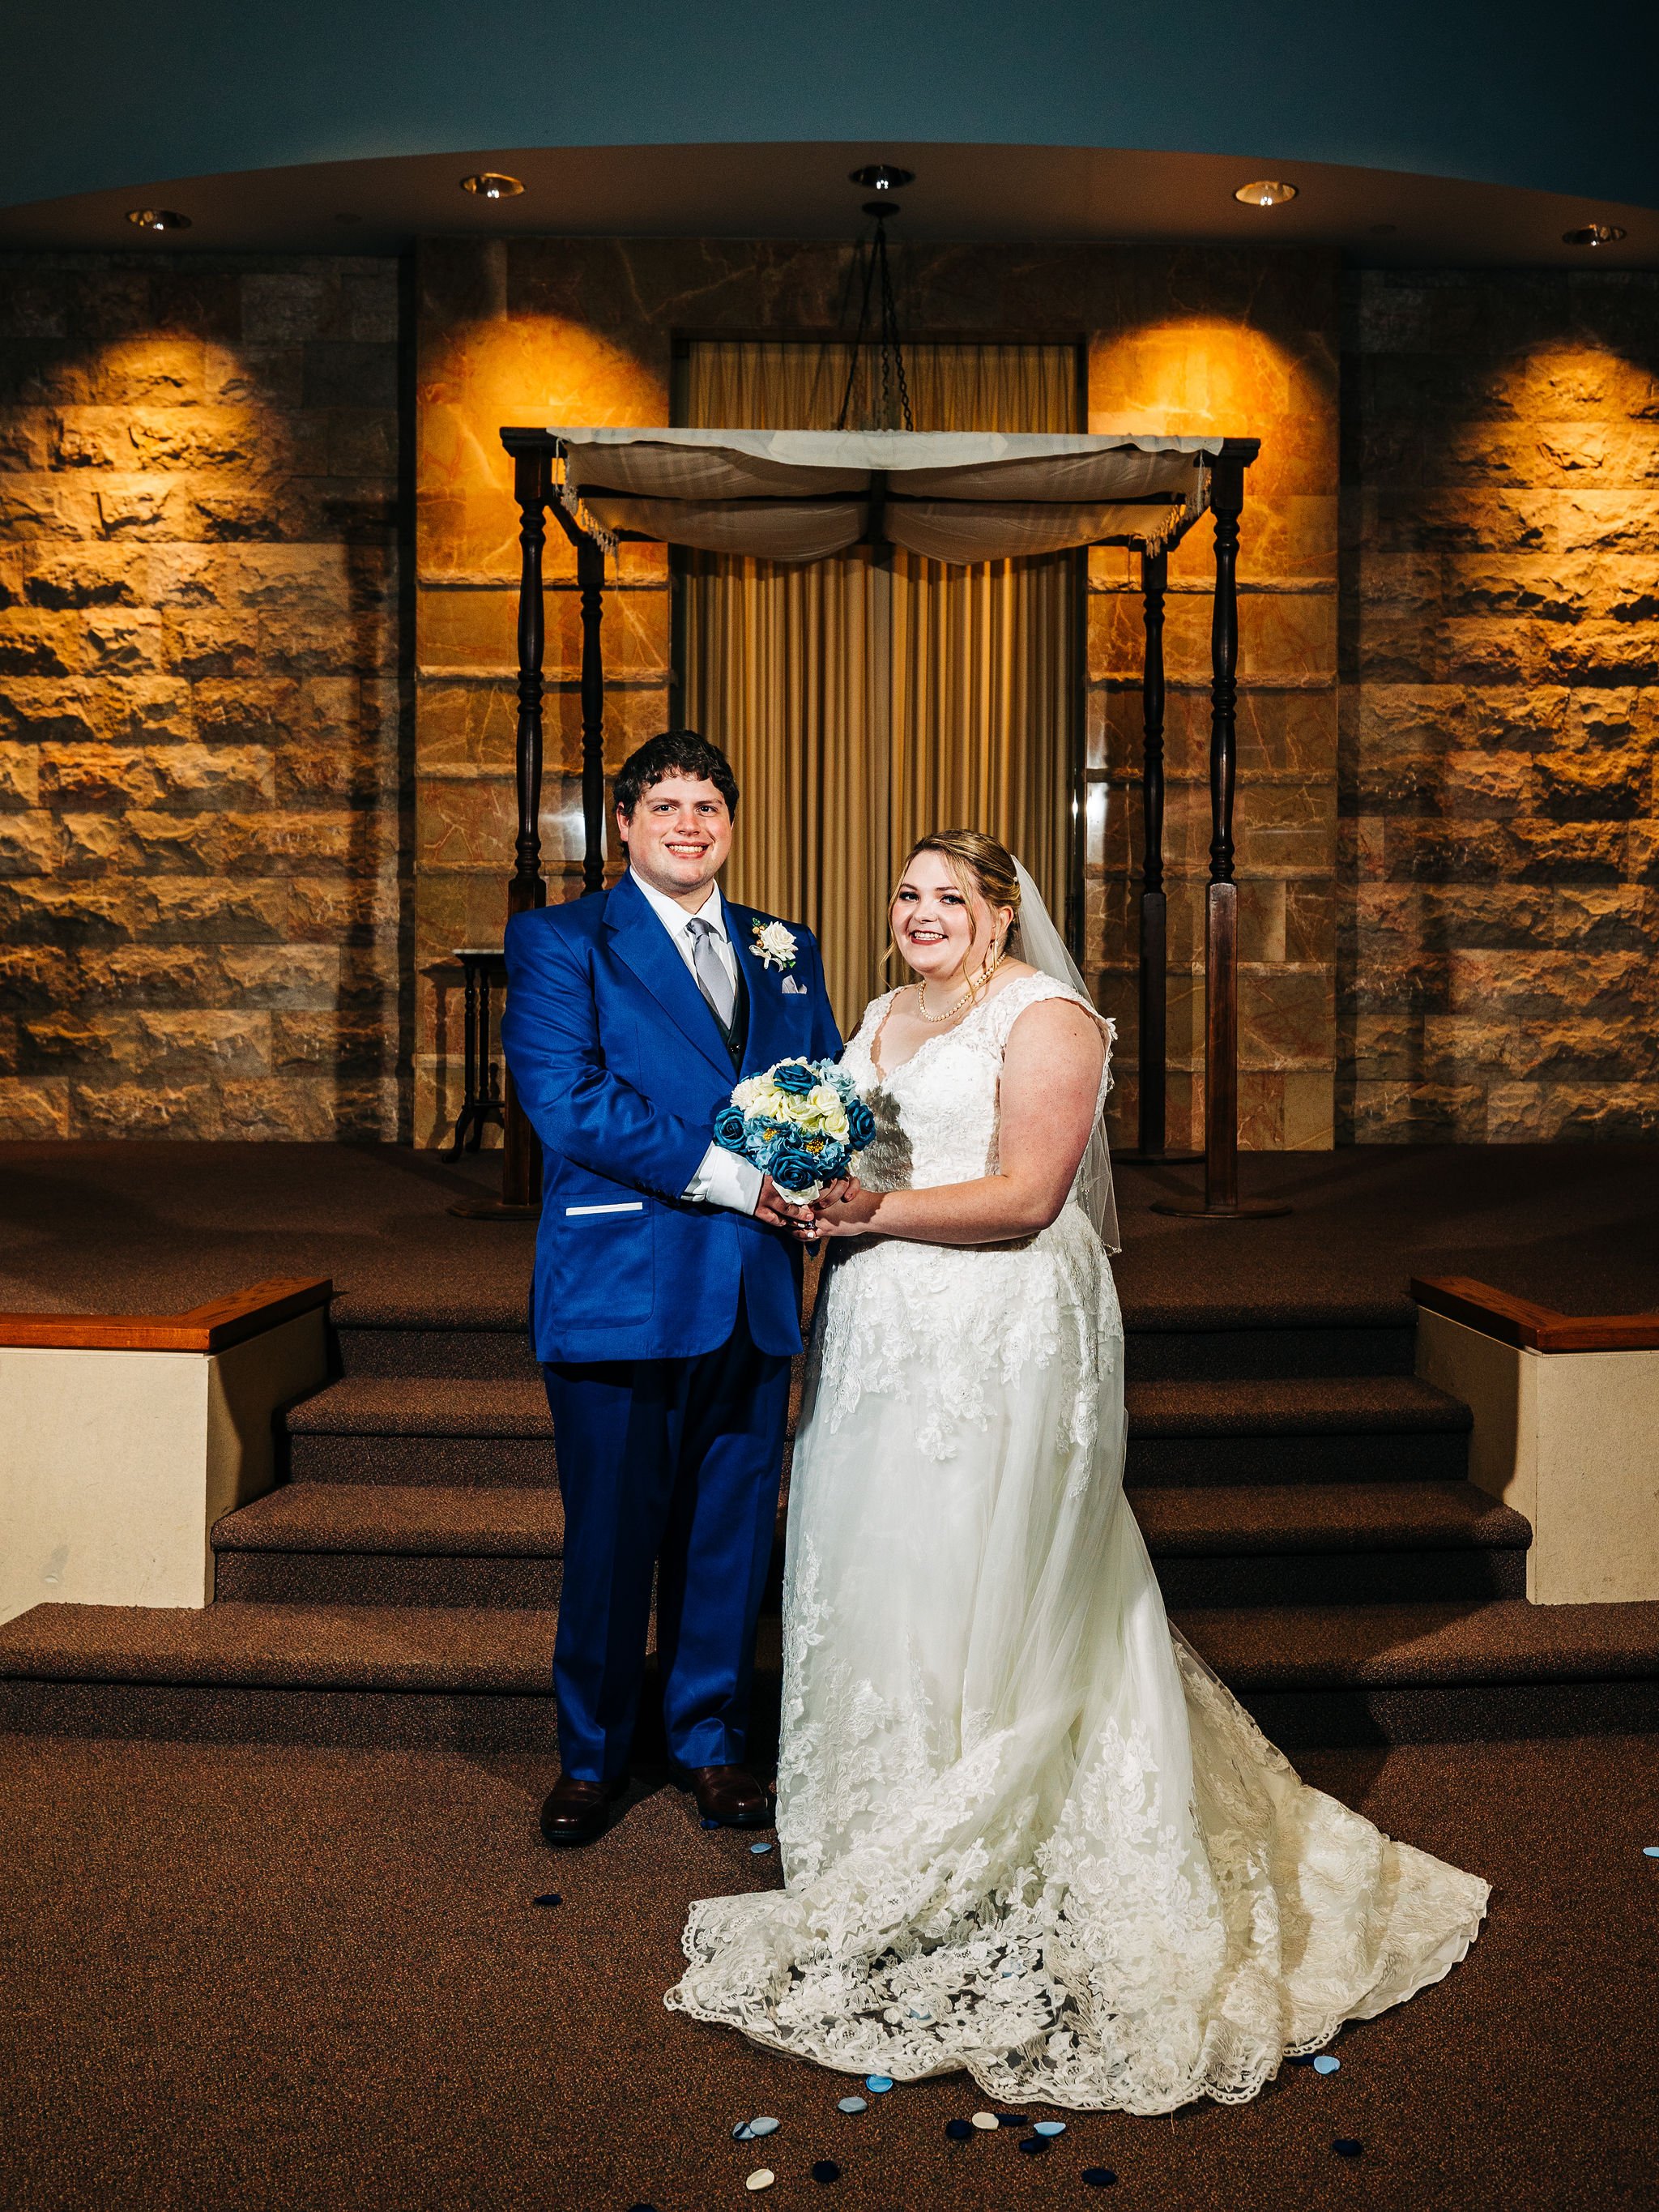 Beth-El-Synagogue-Jewish-Wedding-Pittsburgh-Maya-Elaine-Photography-304.jpg